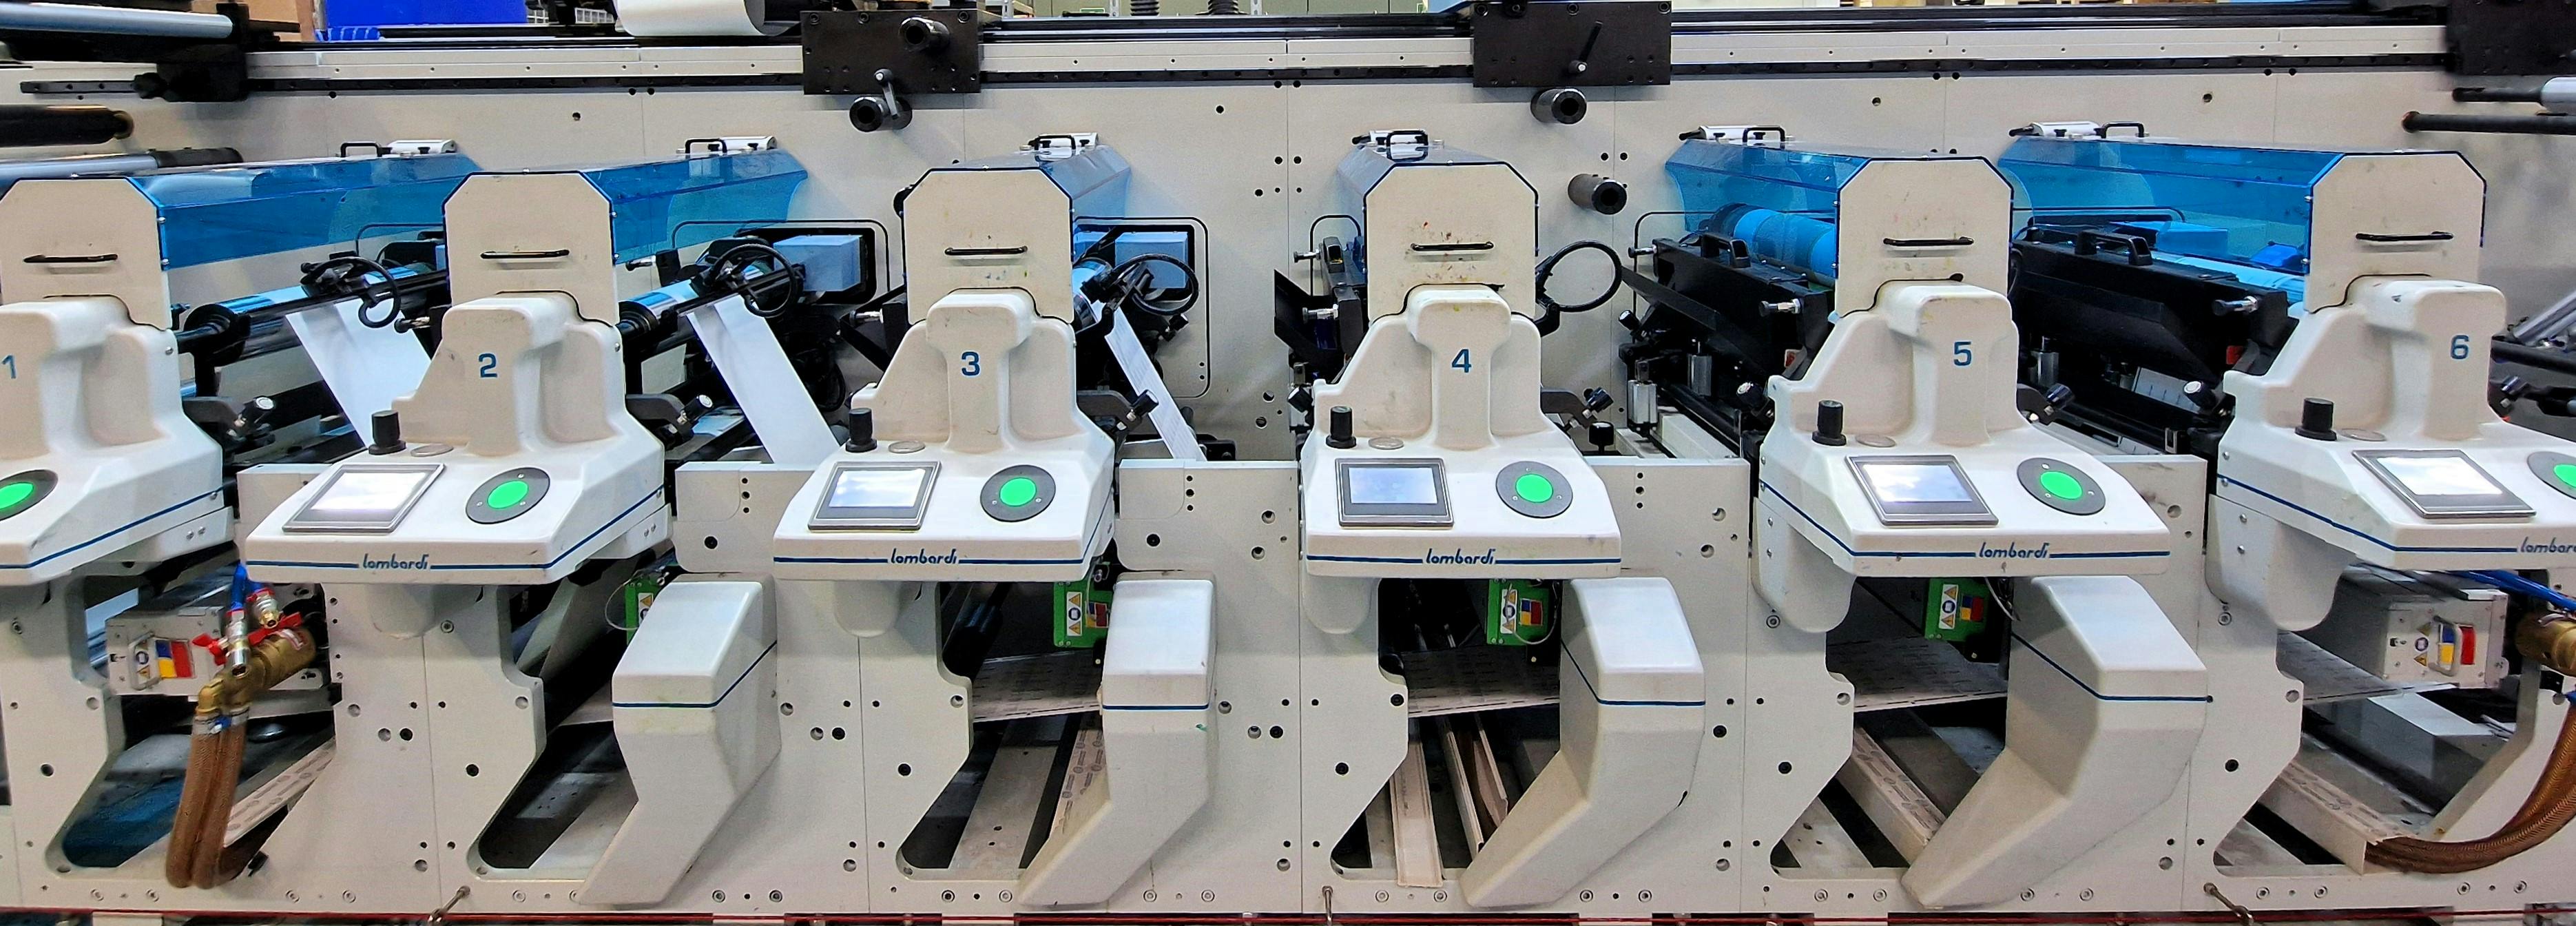 UV Ray retrofits presses with UV LED systems at Eurolabel and Skanem India